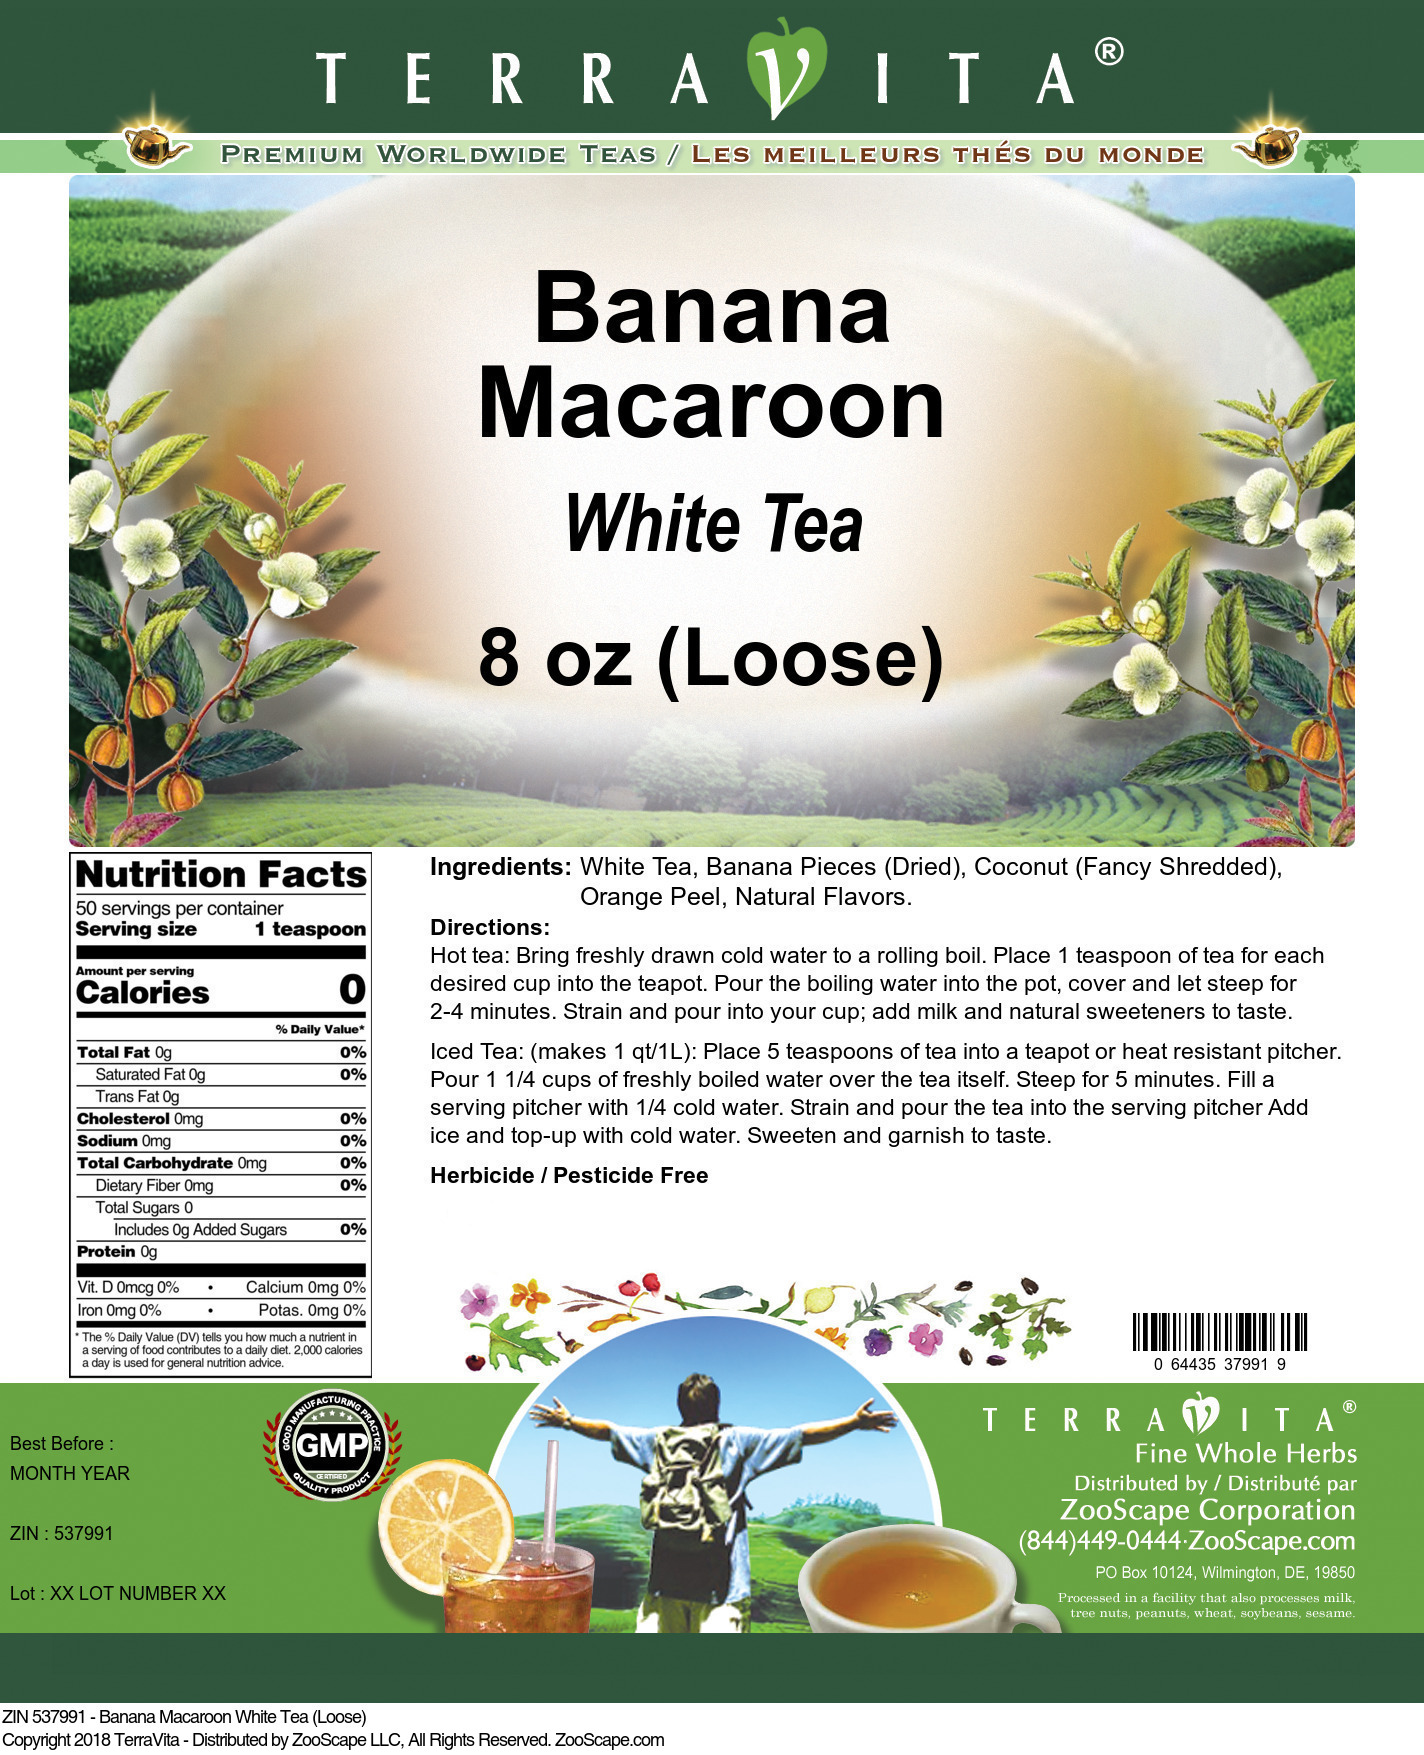 Banana Macaroon White Tea (Loose) - Label